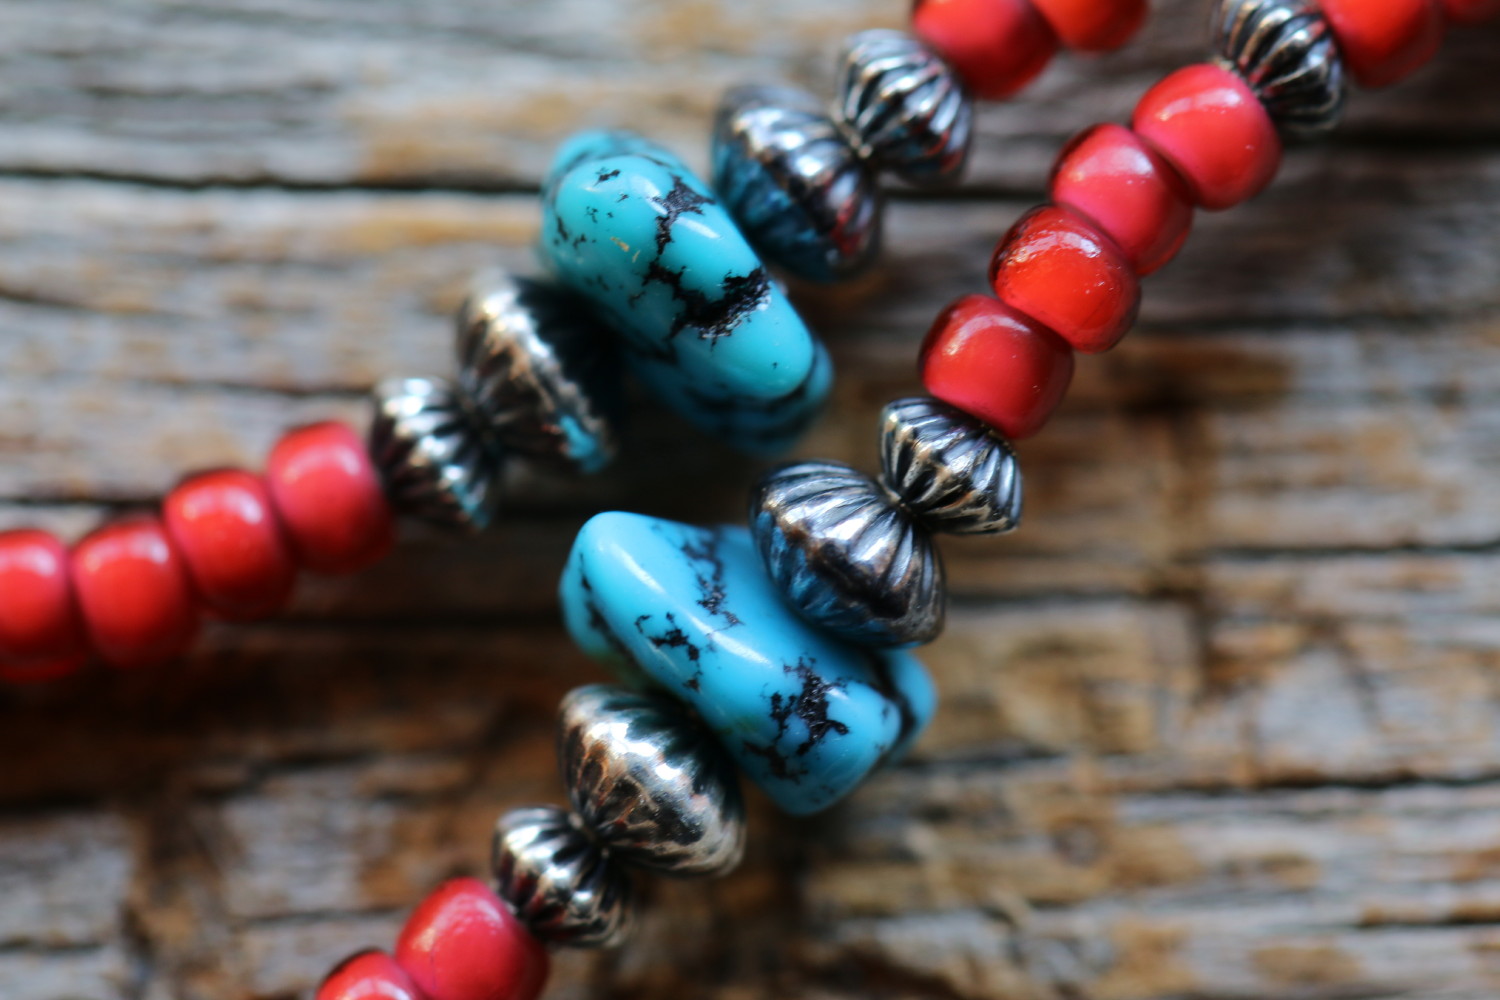  Muscadine-Antique Beads Necklace　キングマンターコイズを。